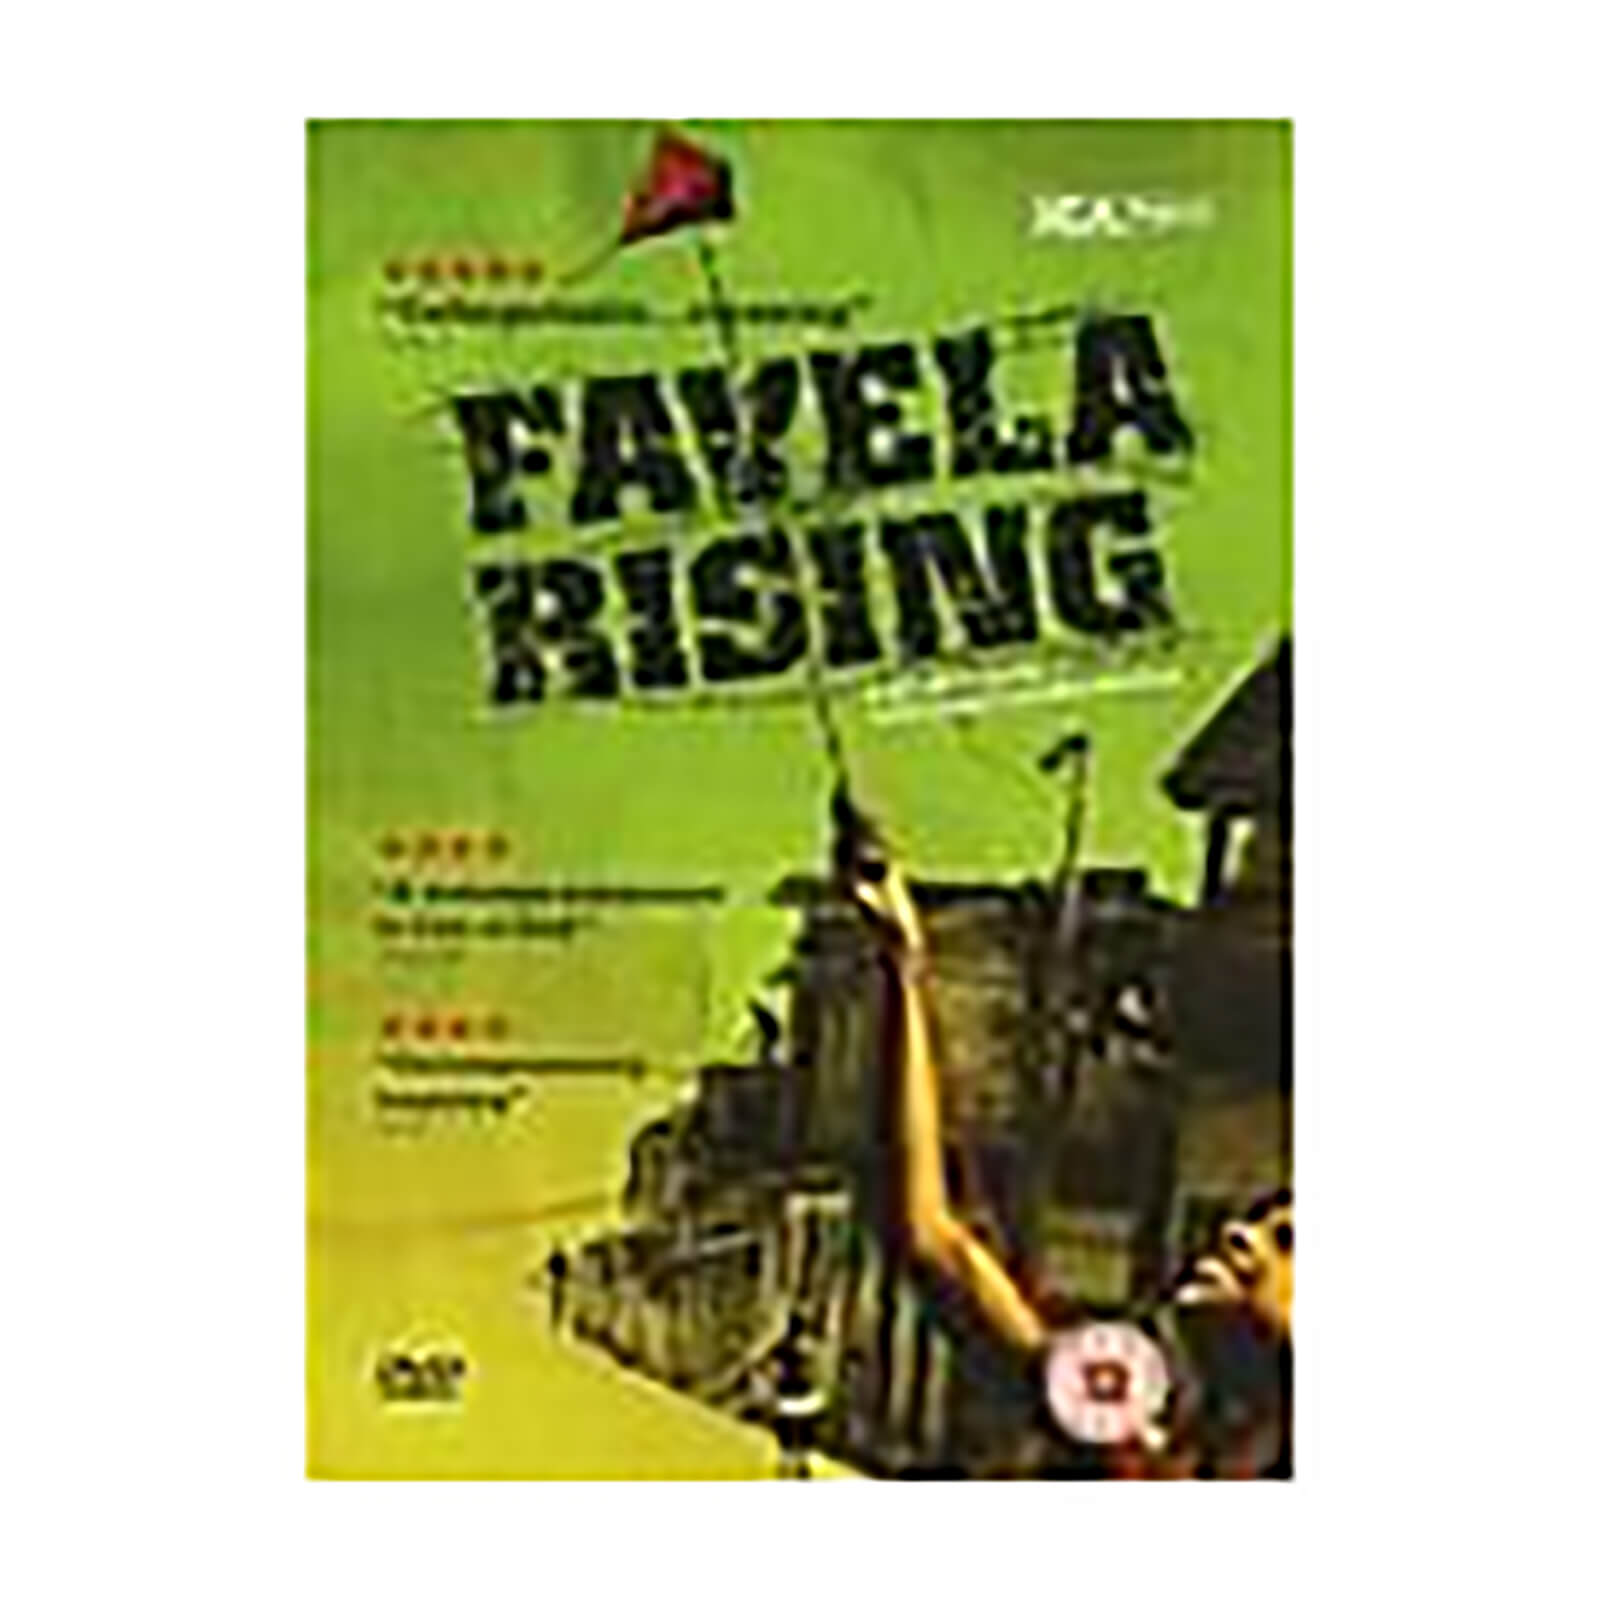 Favela Rising